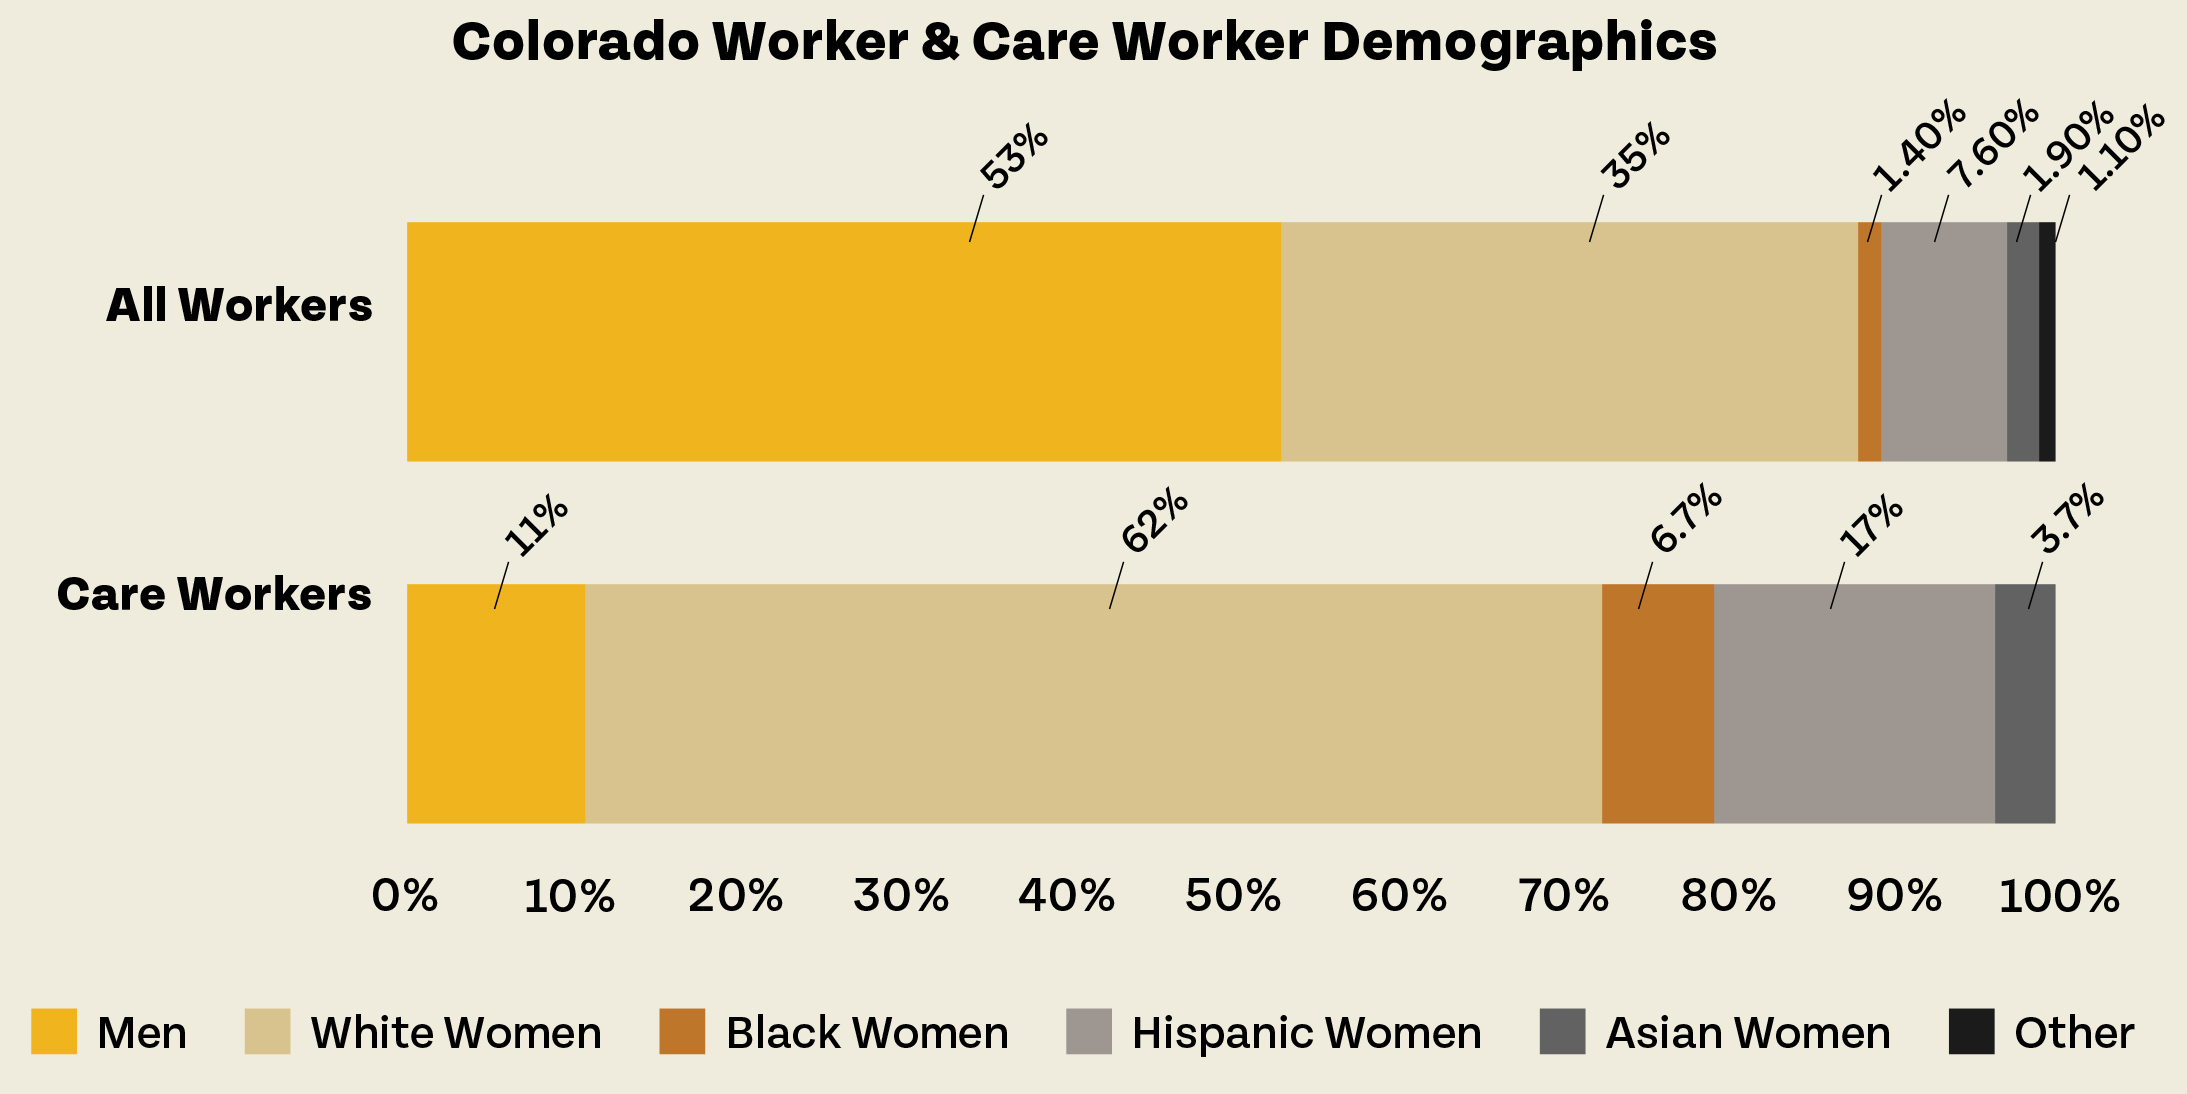 Colorado Worker & Care Worker Demographics